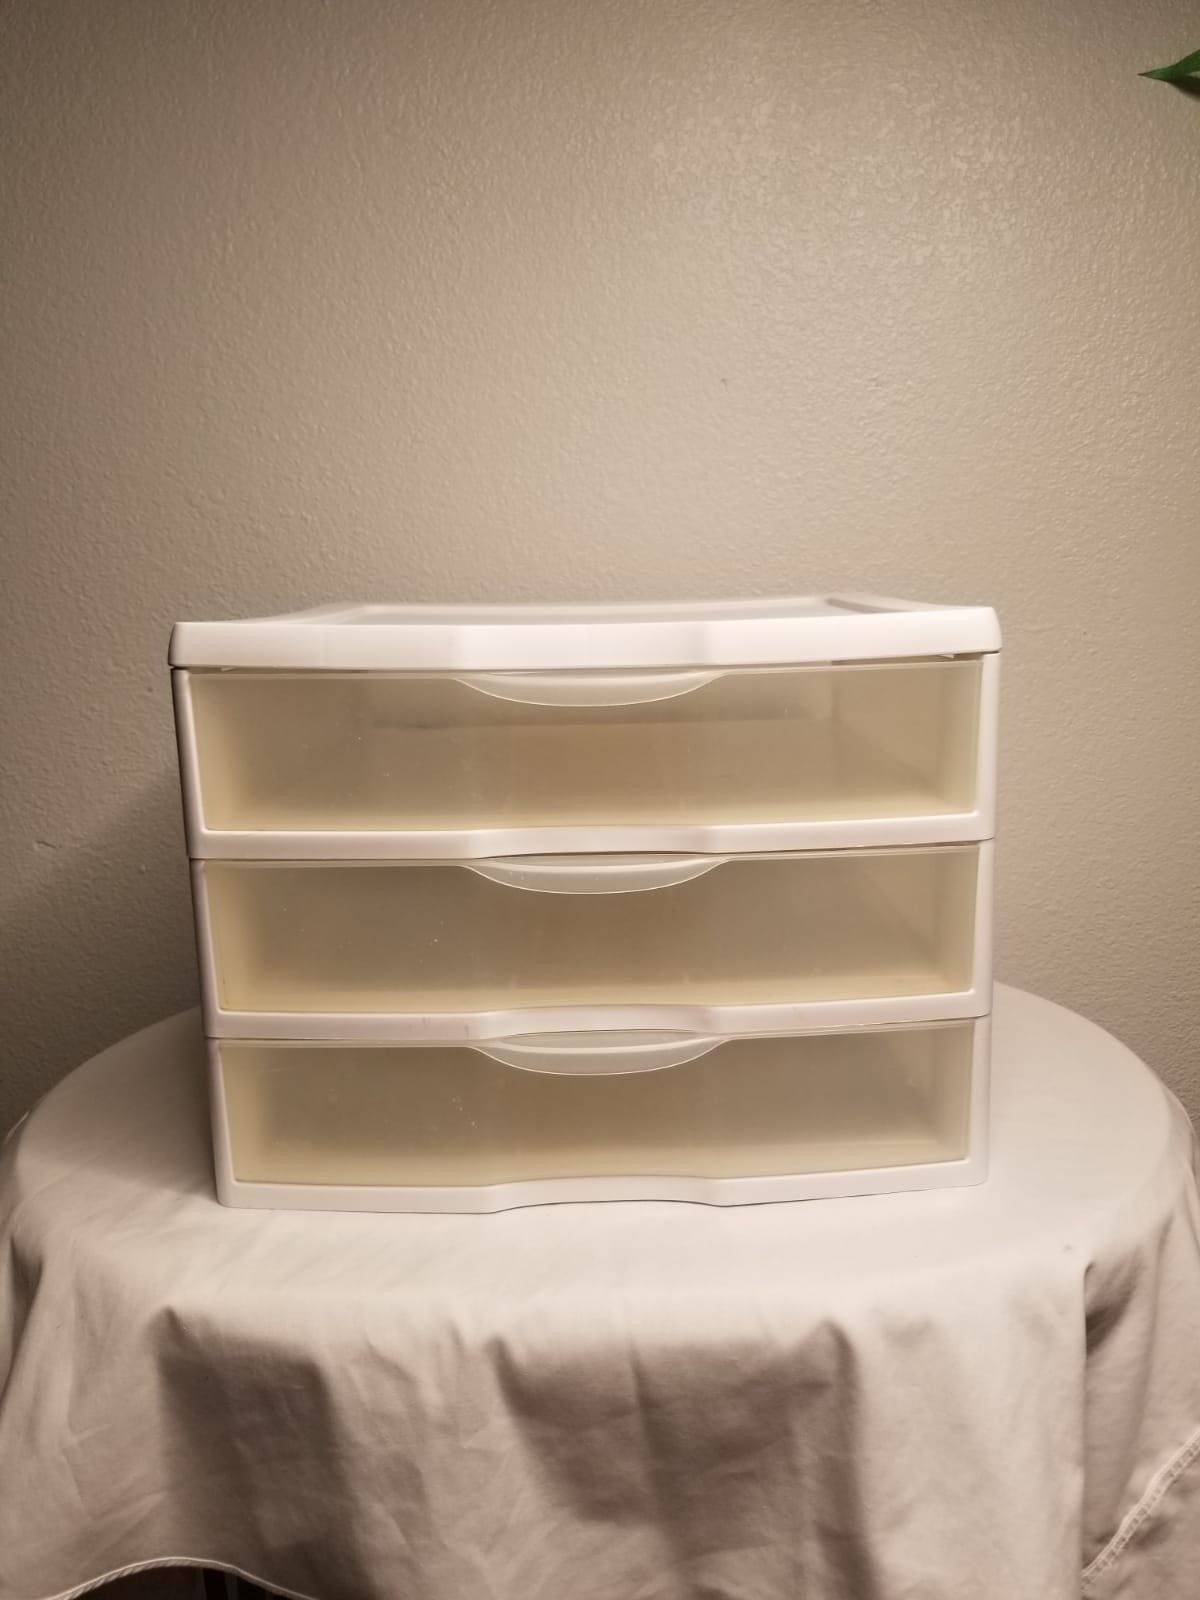 3 compartment plastic storage drawer.